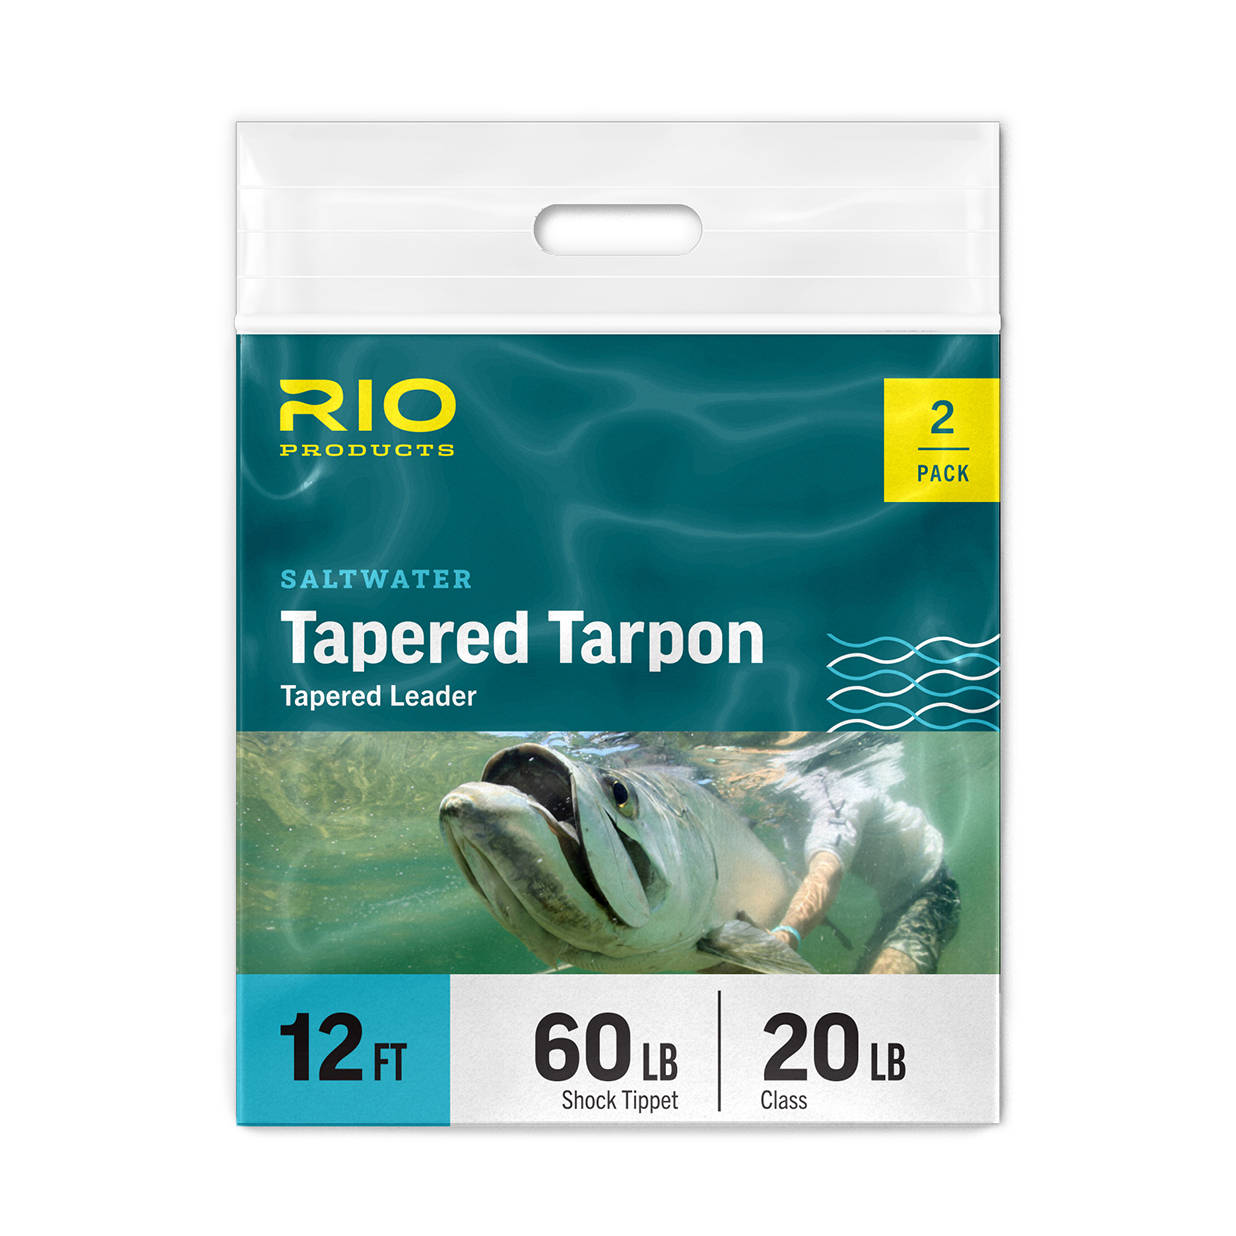 RIO Tapered Tarpon Leaders – Guide Flyfishing, Fly Fishing Rods, Reels, Sage, Redington, RIO